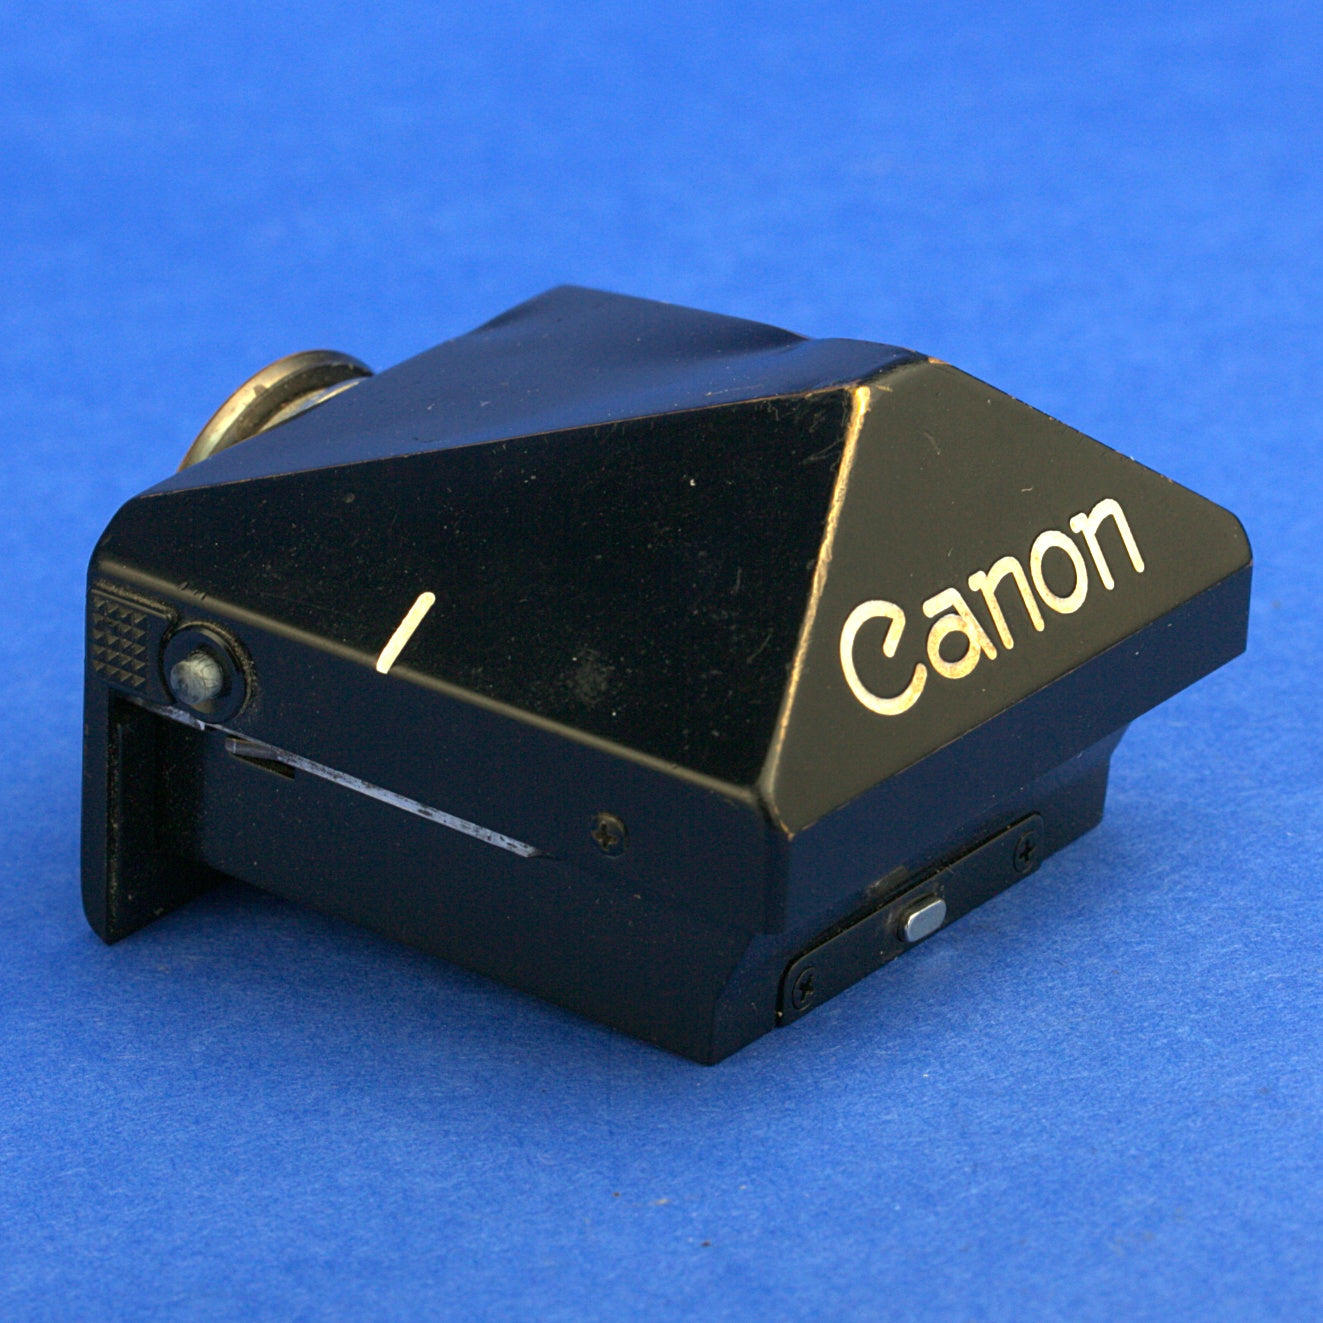 Canon Prism Finder for F-1 Cameras